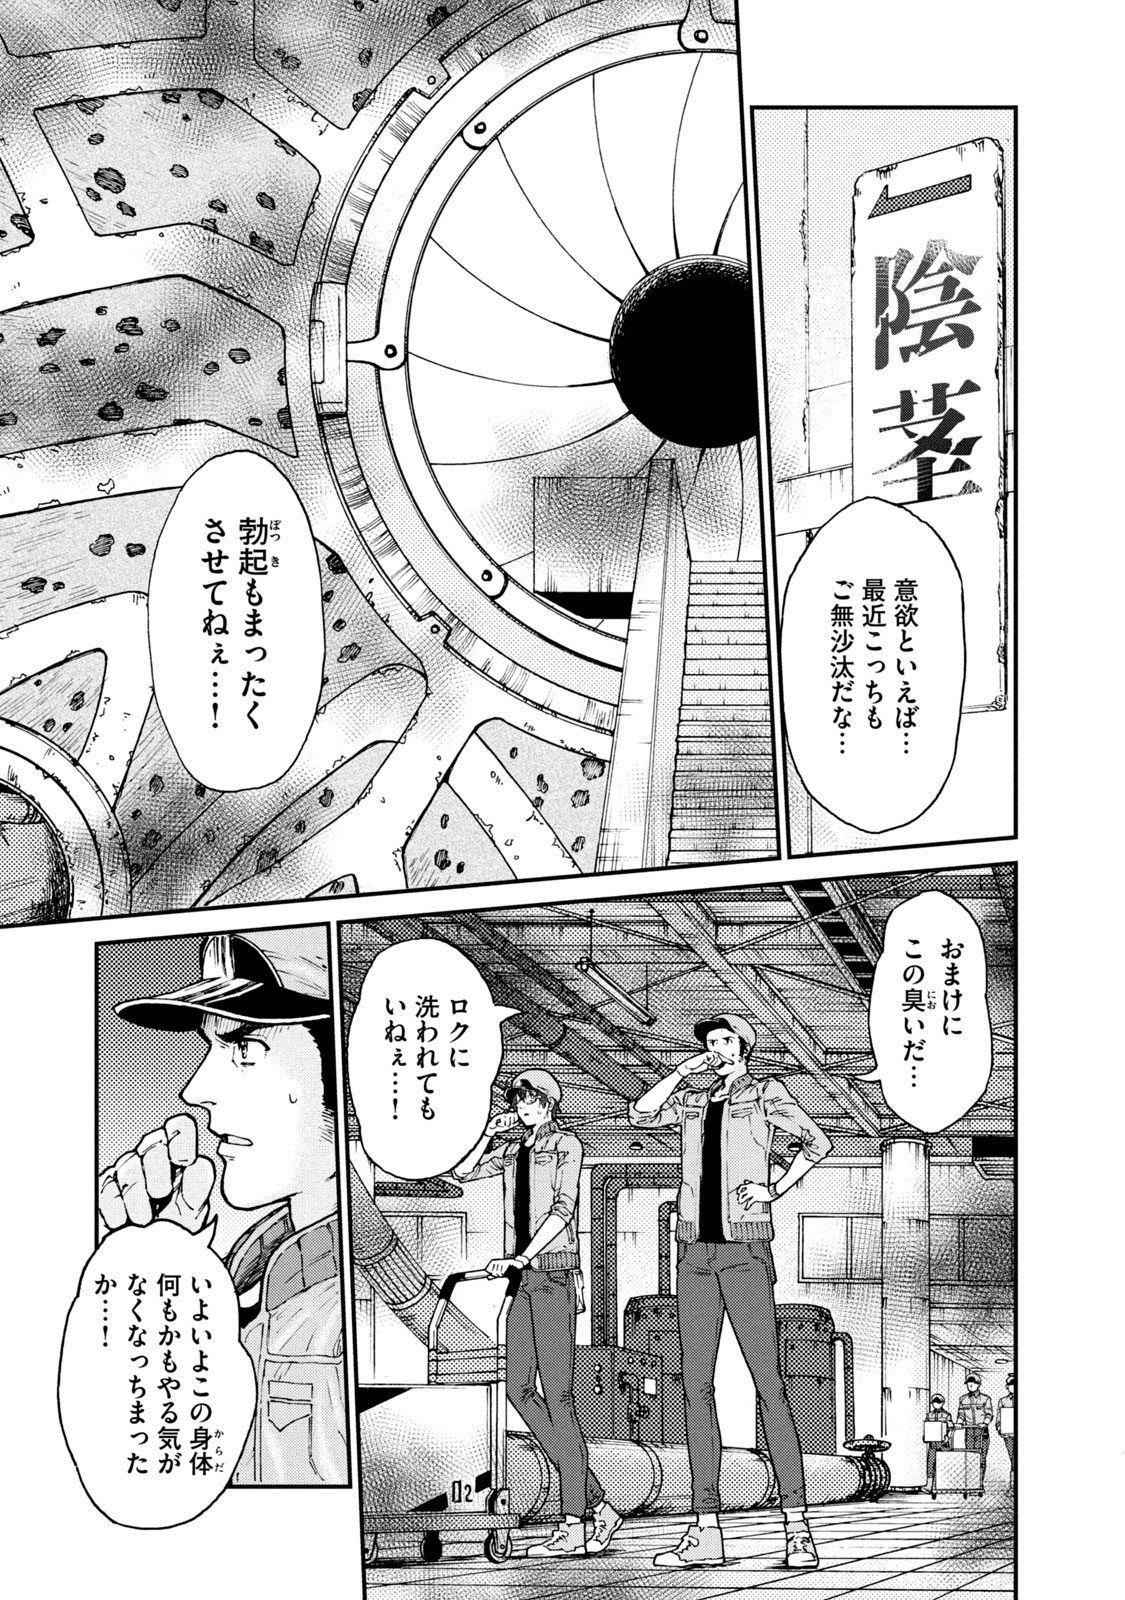 Hataraku Saibou BLACK - Chapter 33 - Page 9